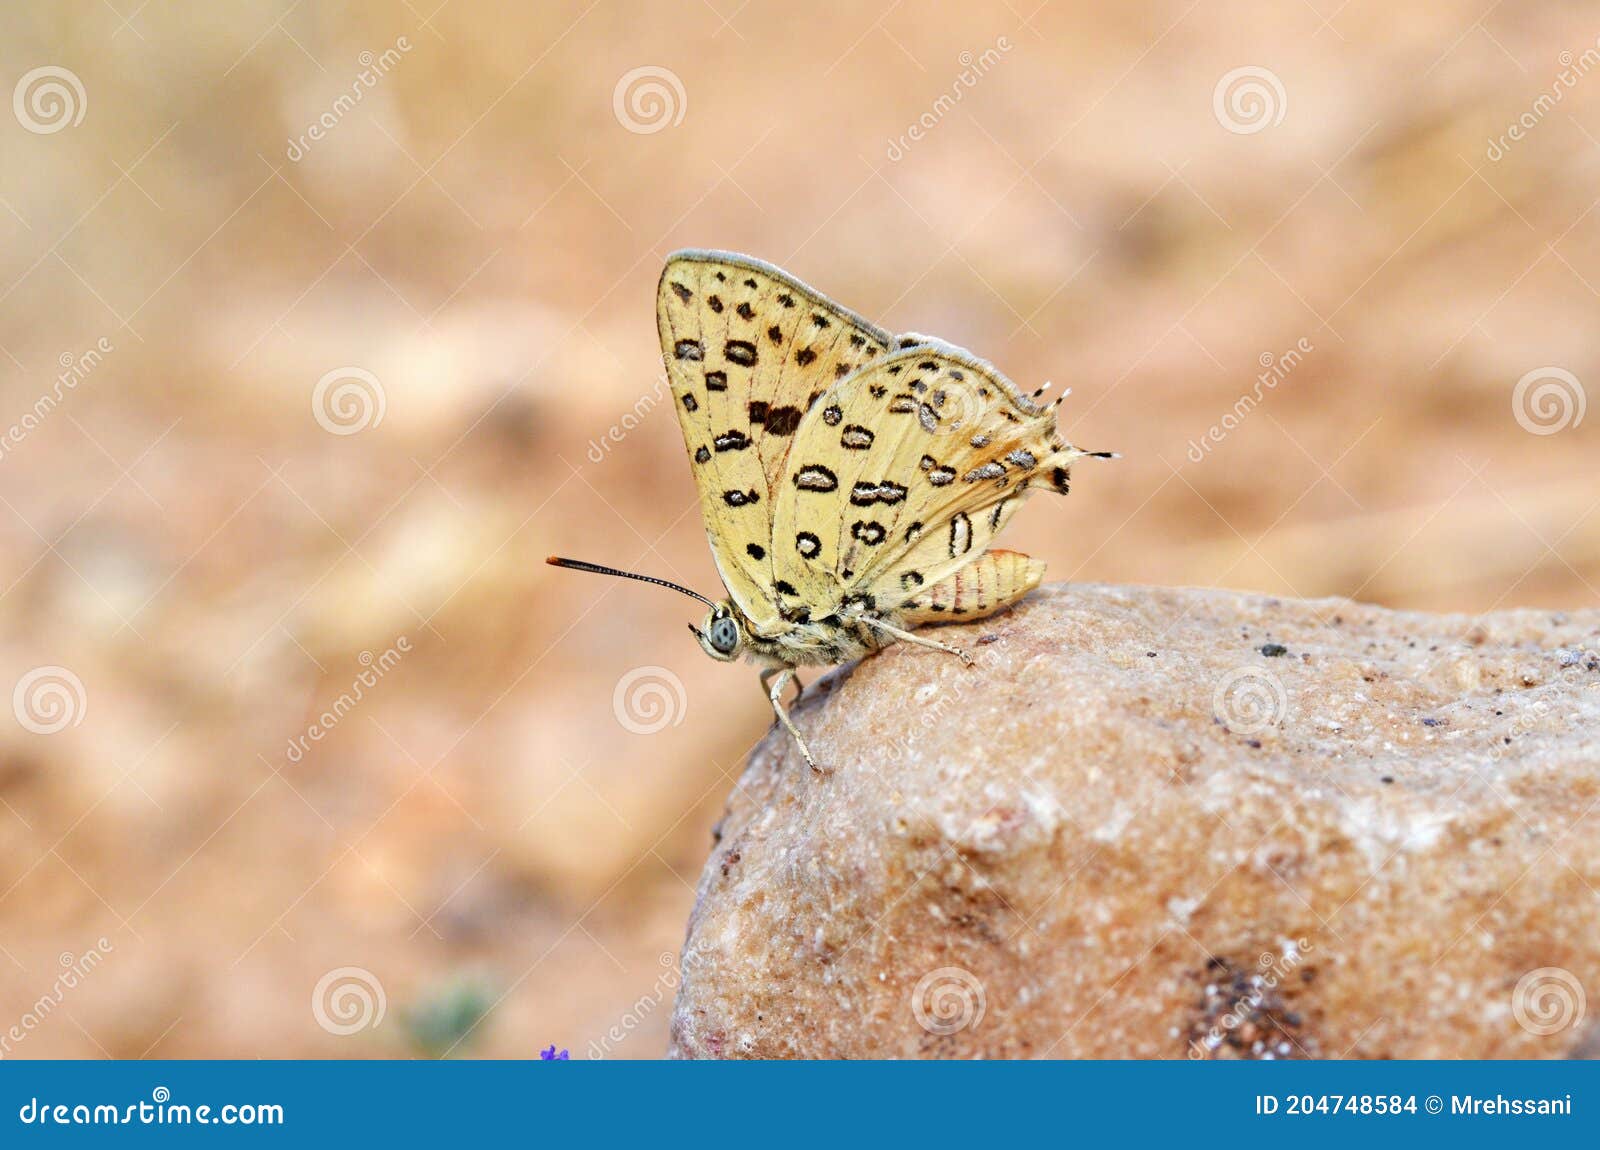 cigaritis maxima butterfly sitting on rock , butterflies of iran